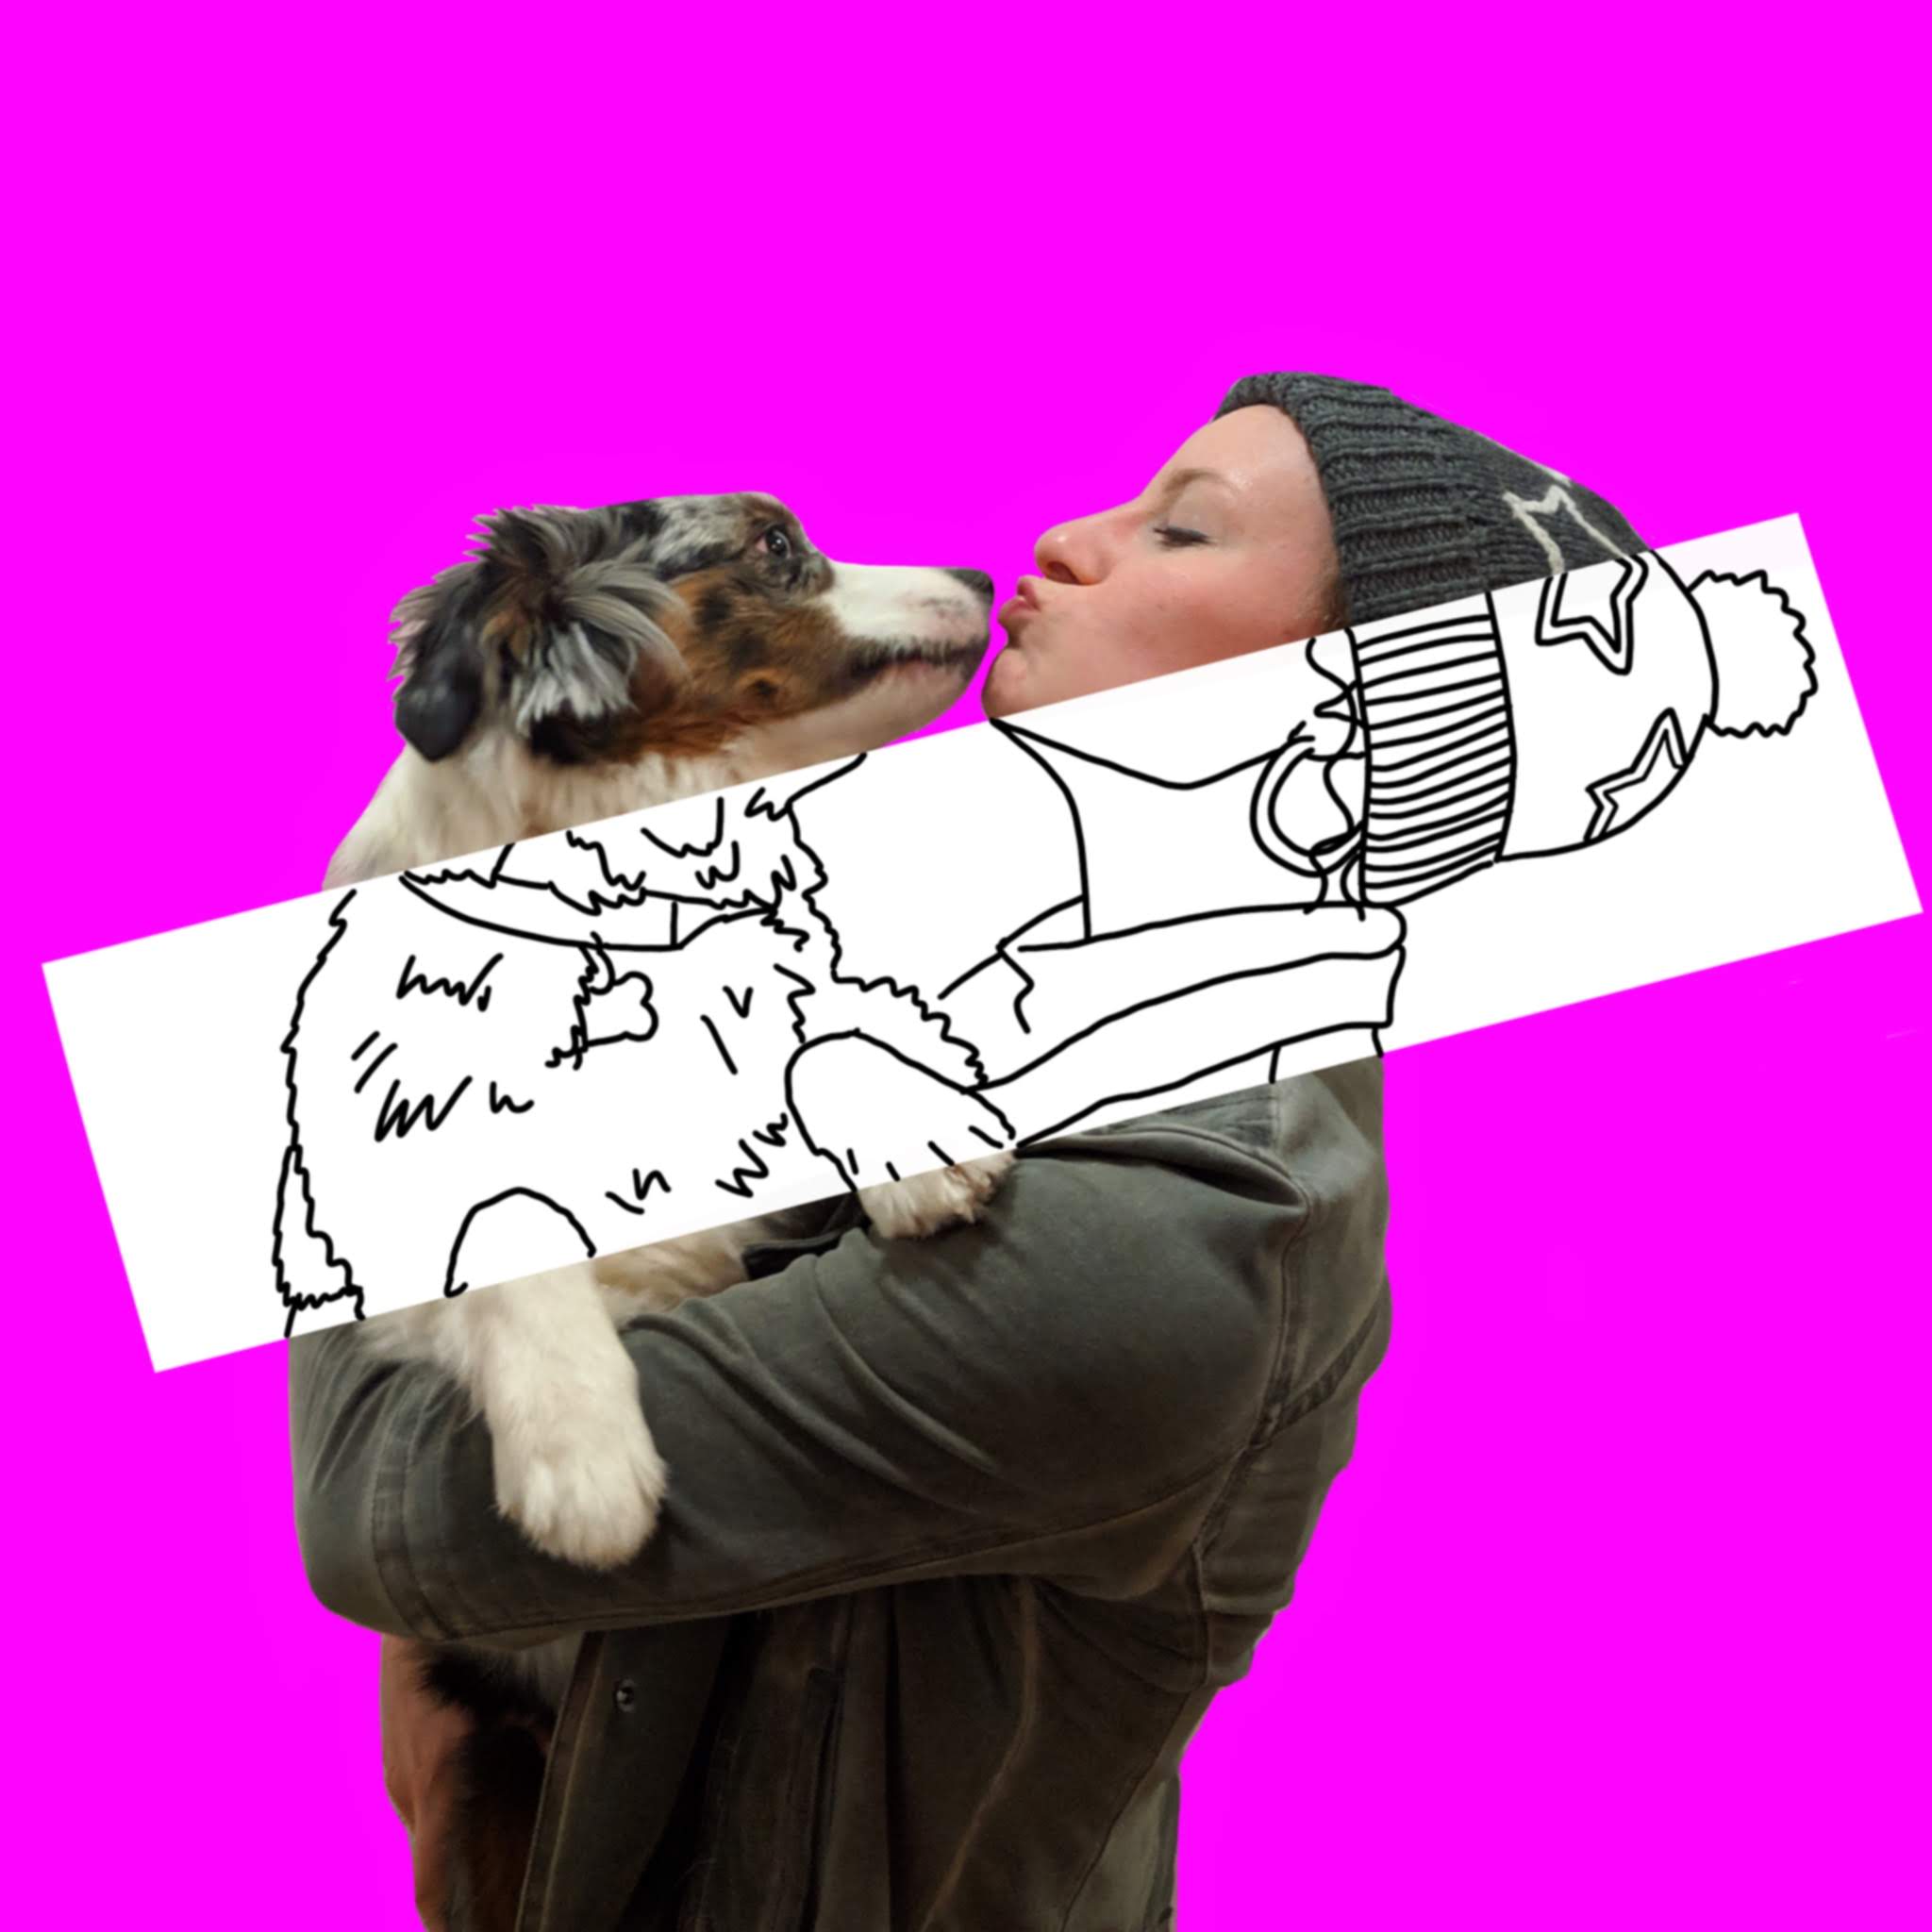 Me and my dog digital illustration